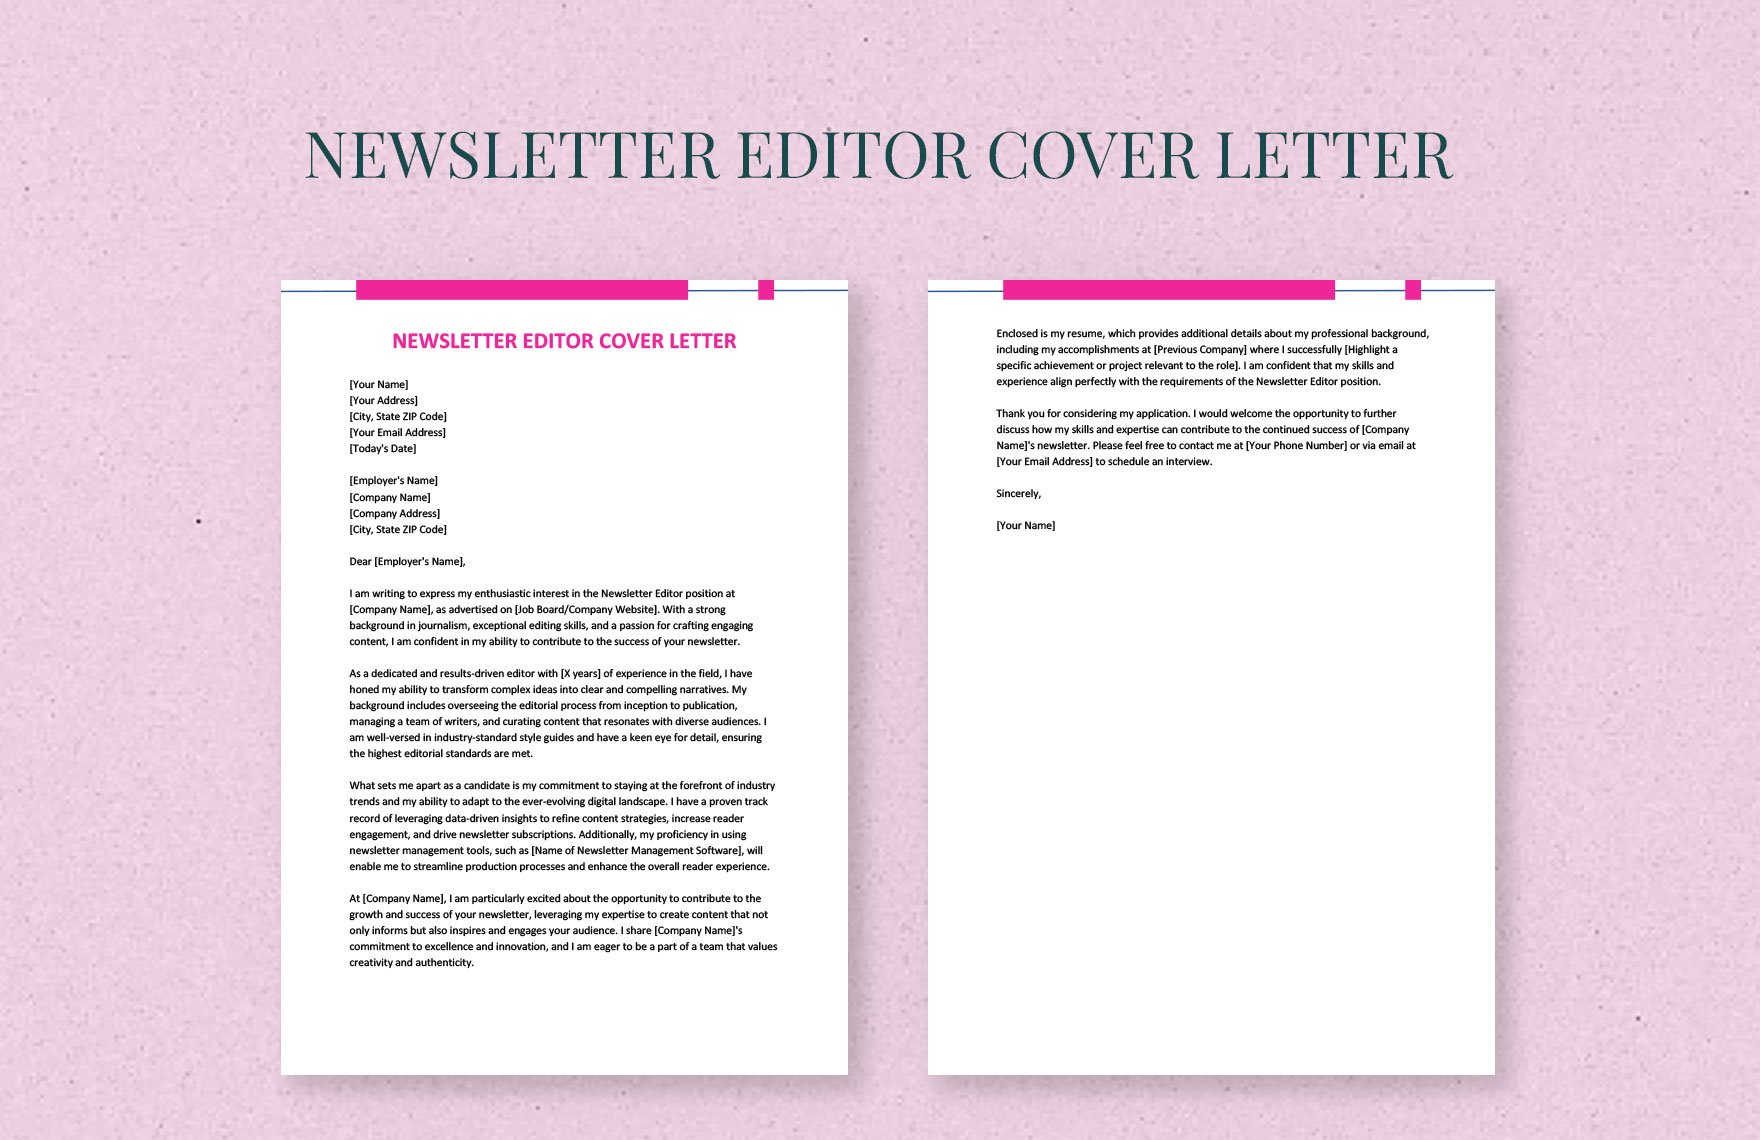 Newsletter Editor Cover Letter in Word, Google Docs